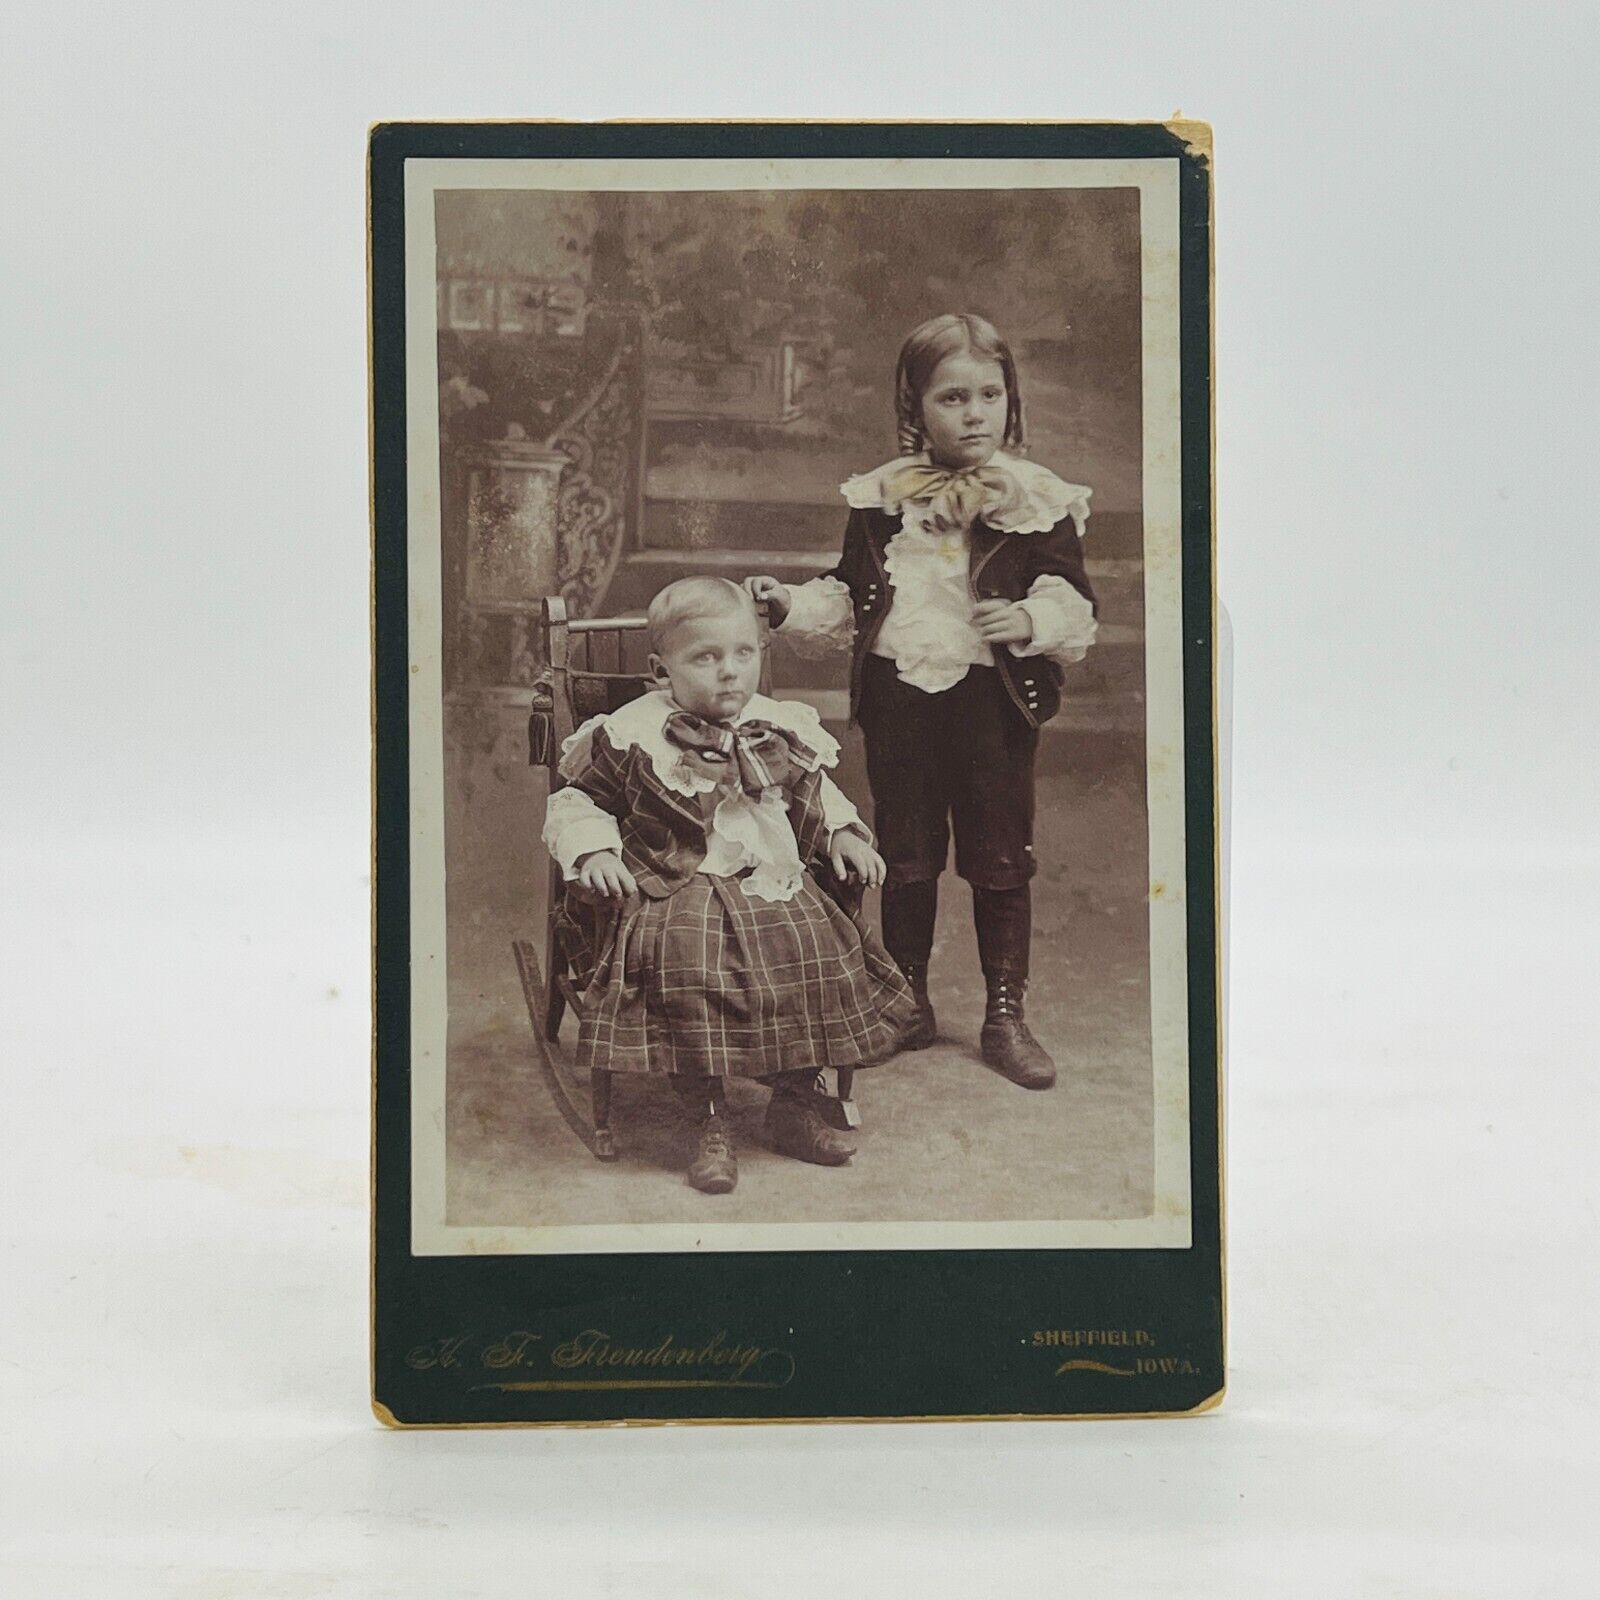 Antique Cabinet Card Photo Cute Girls Sisters Sheffield Iowa Freudenberg Studio